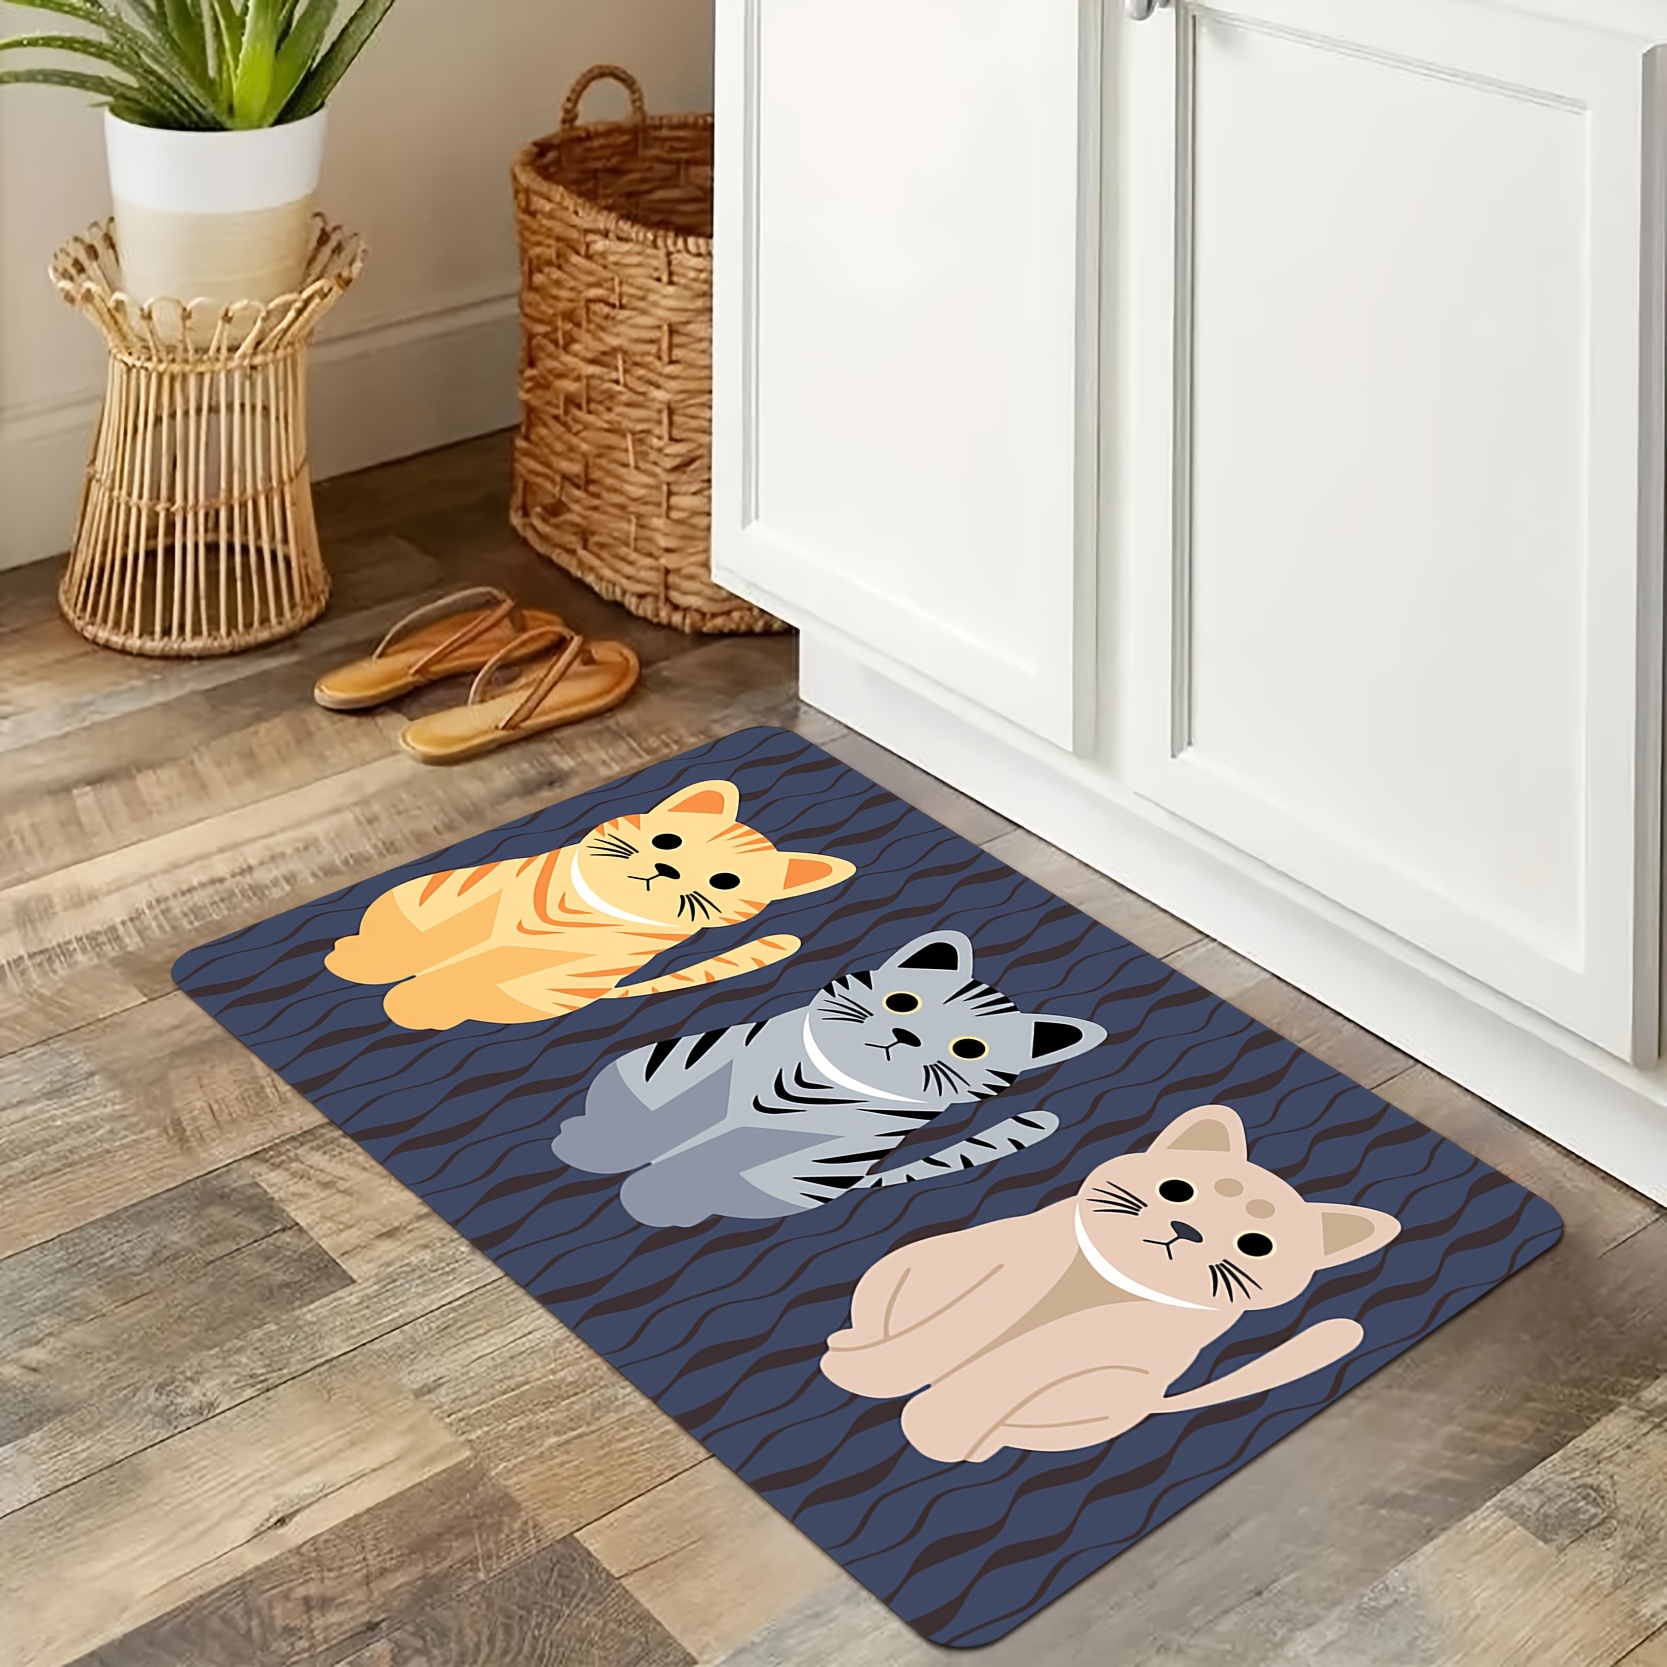 Everso Cartoon Floor Mats Cute Cat Print Bathroom Kitchen Carpets